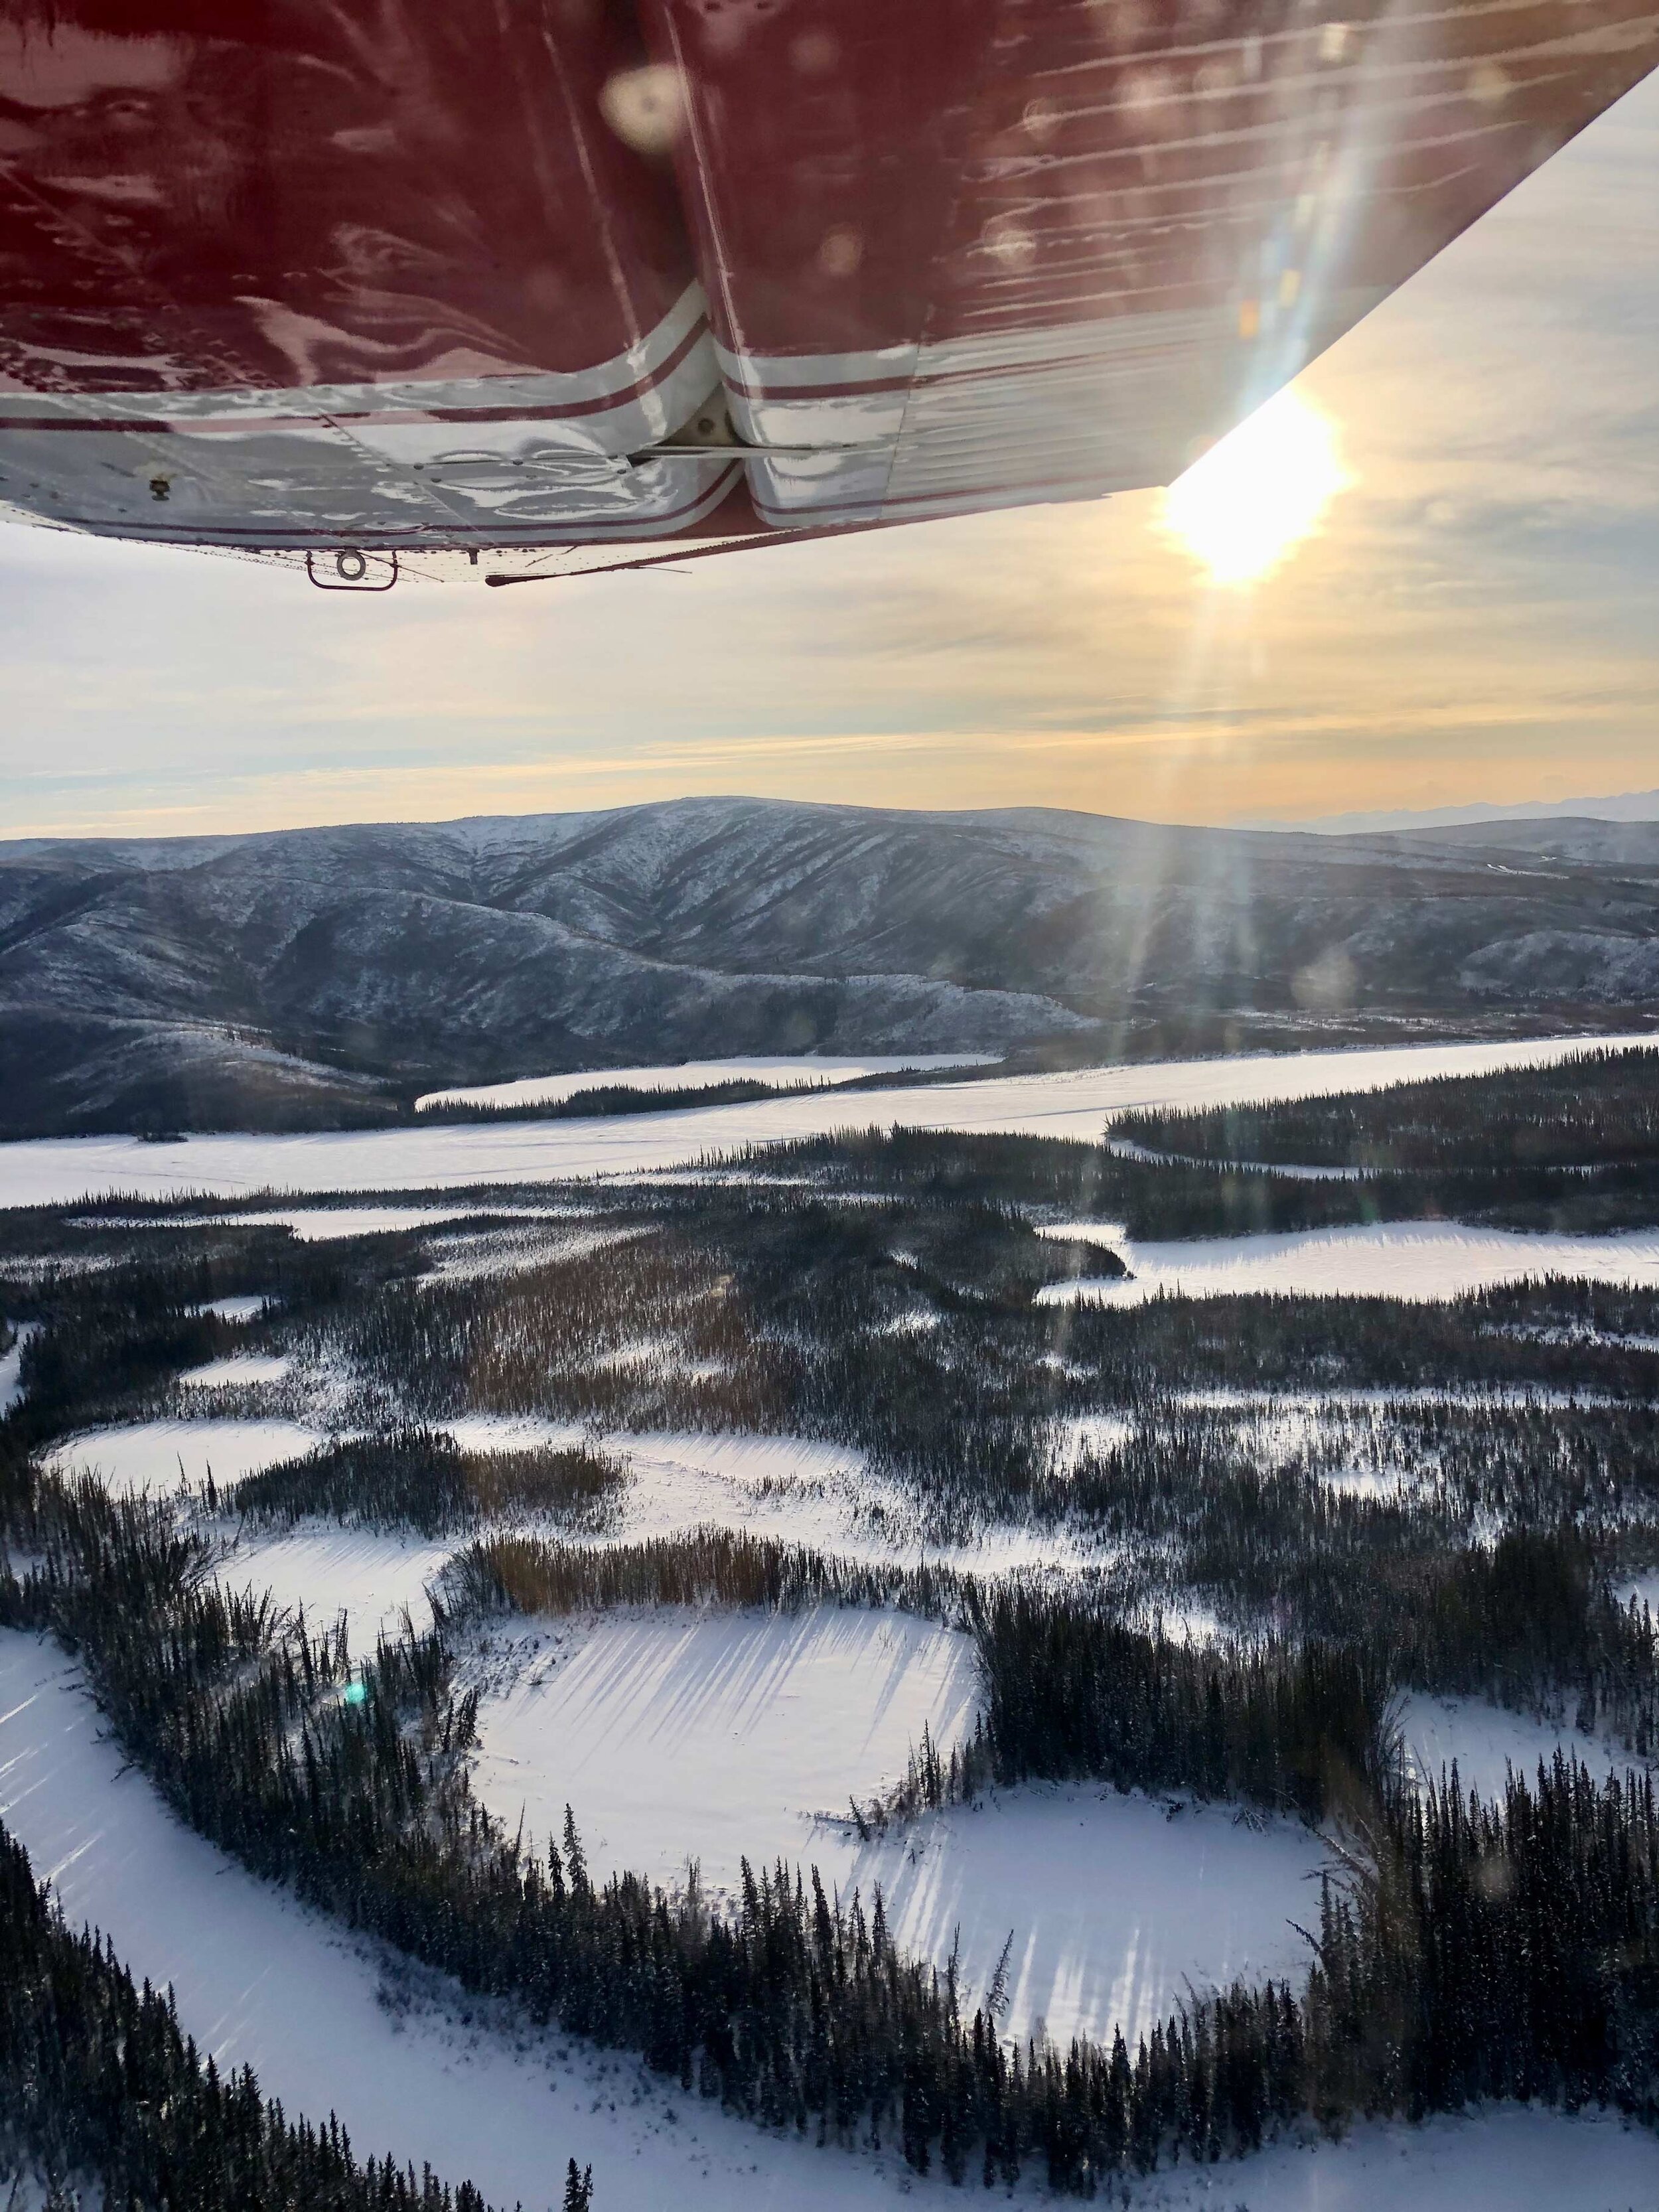  View of Alaskan landscape in Tetlin National Wildlife Refuge from a bush plane.  